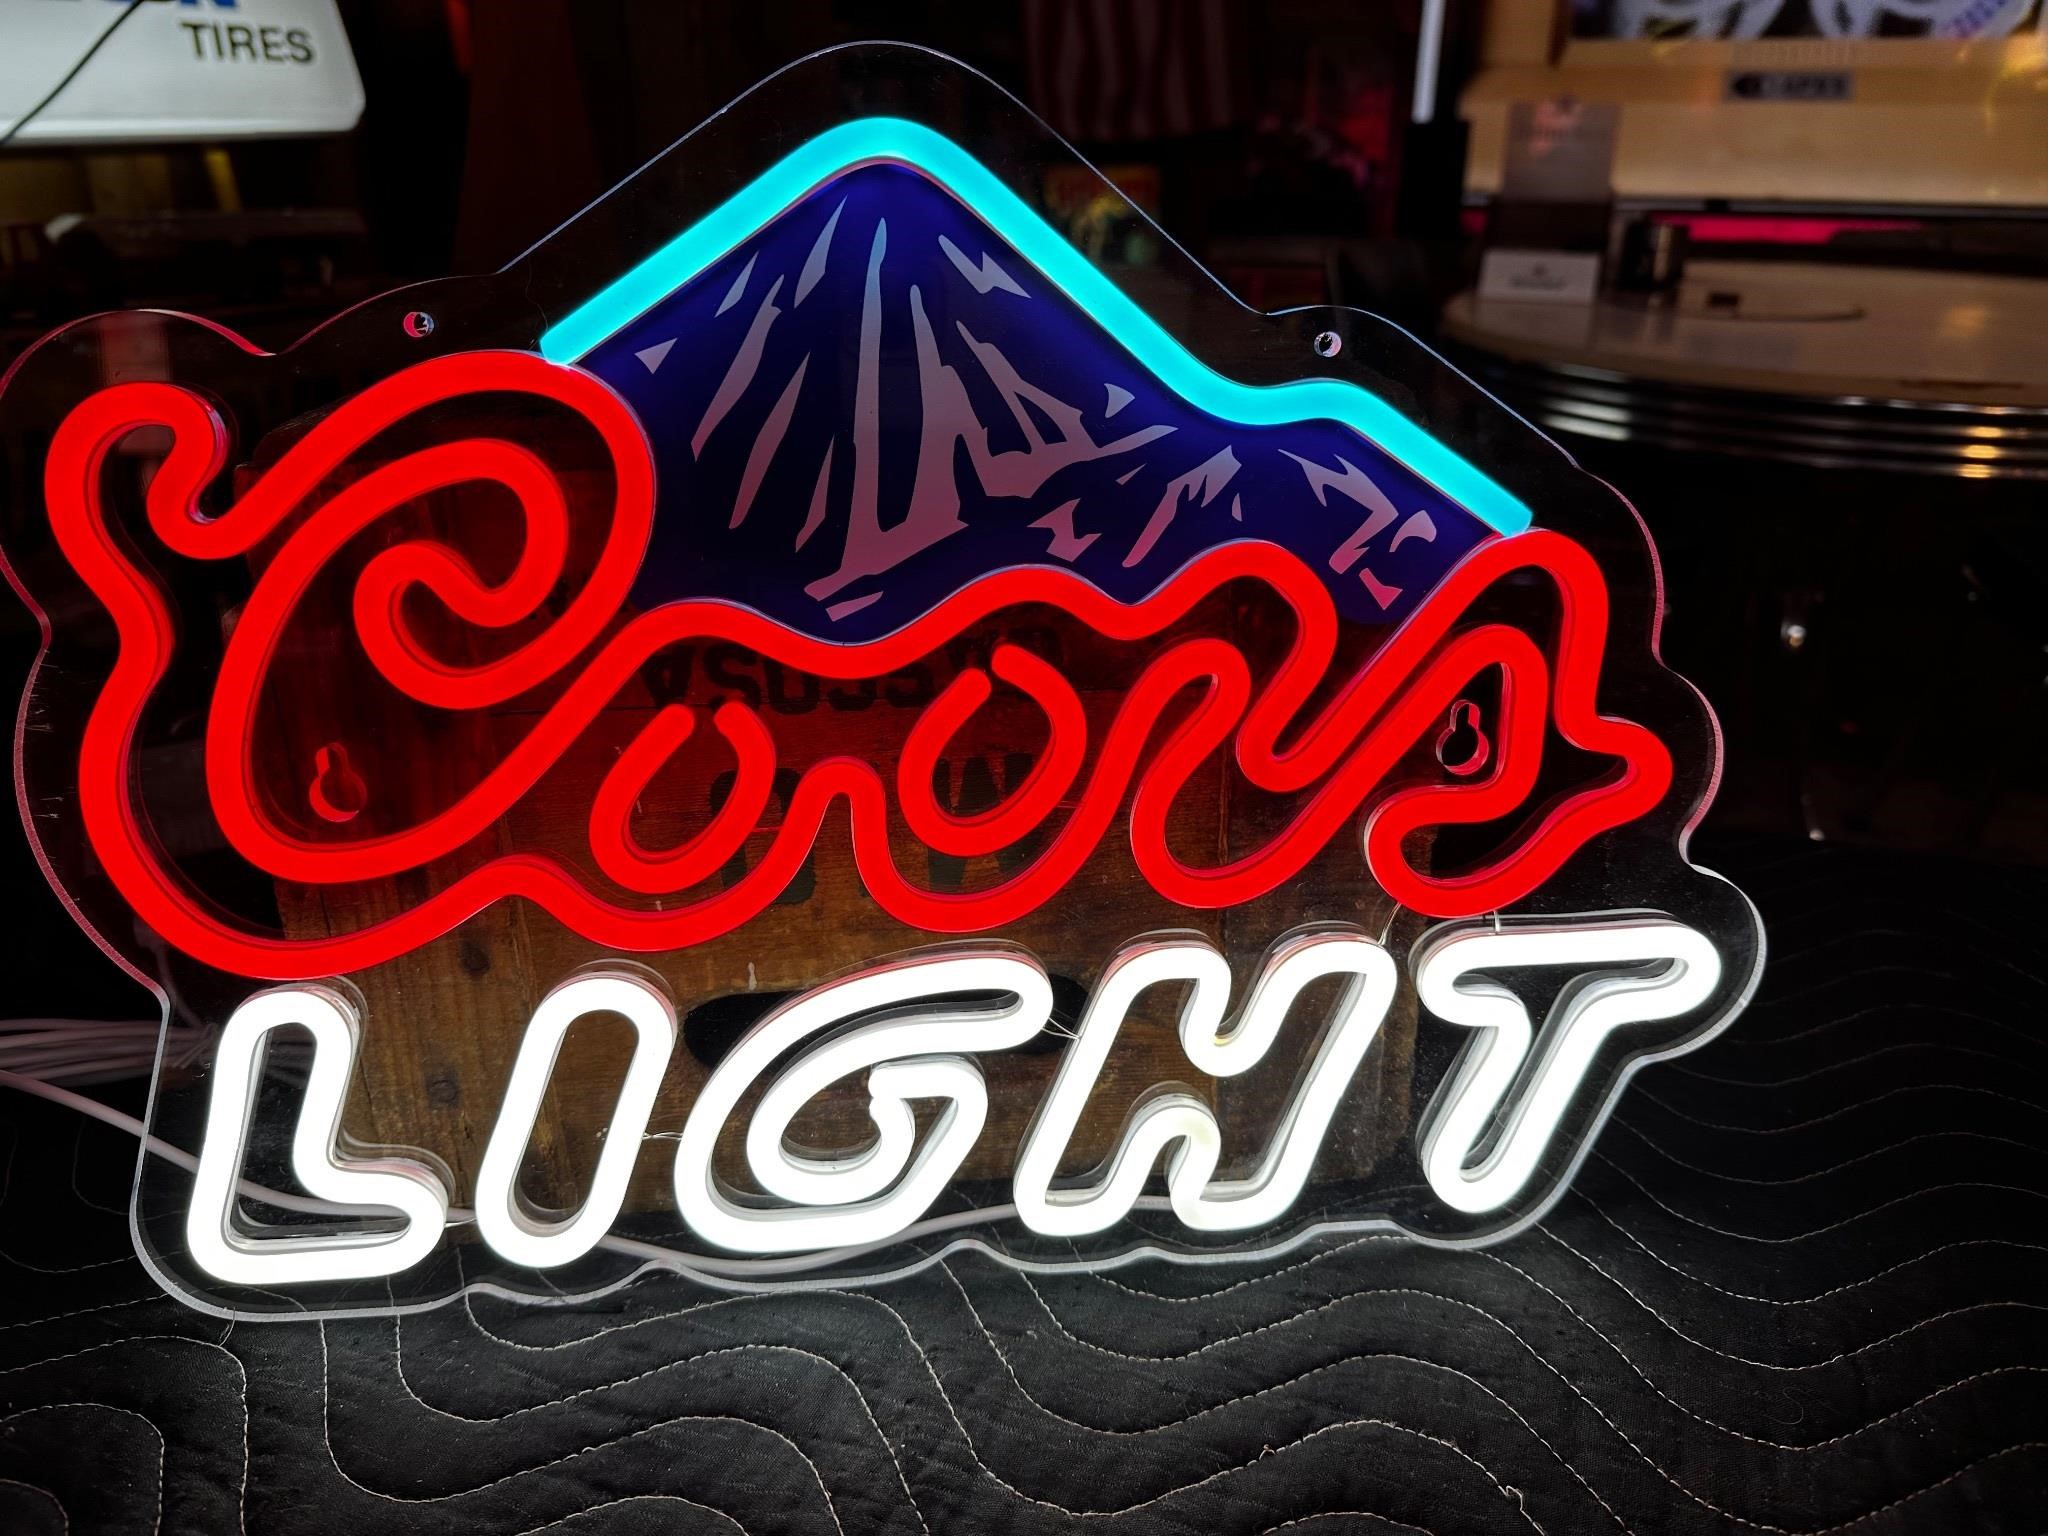 17 x 12” Coors Light Neon Sign